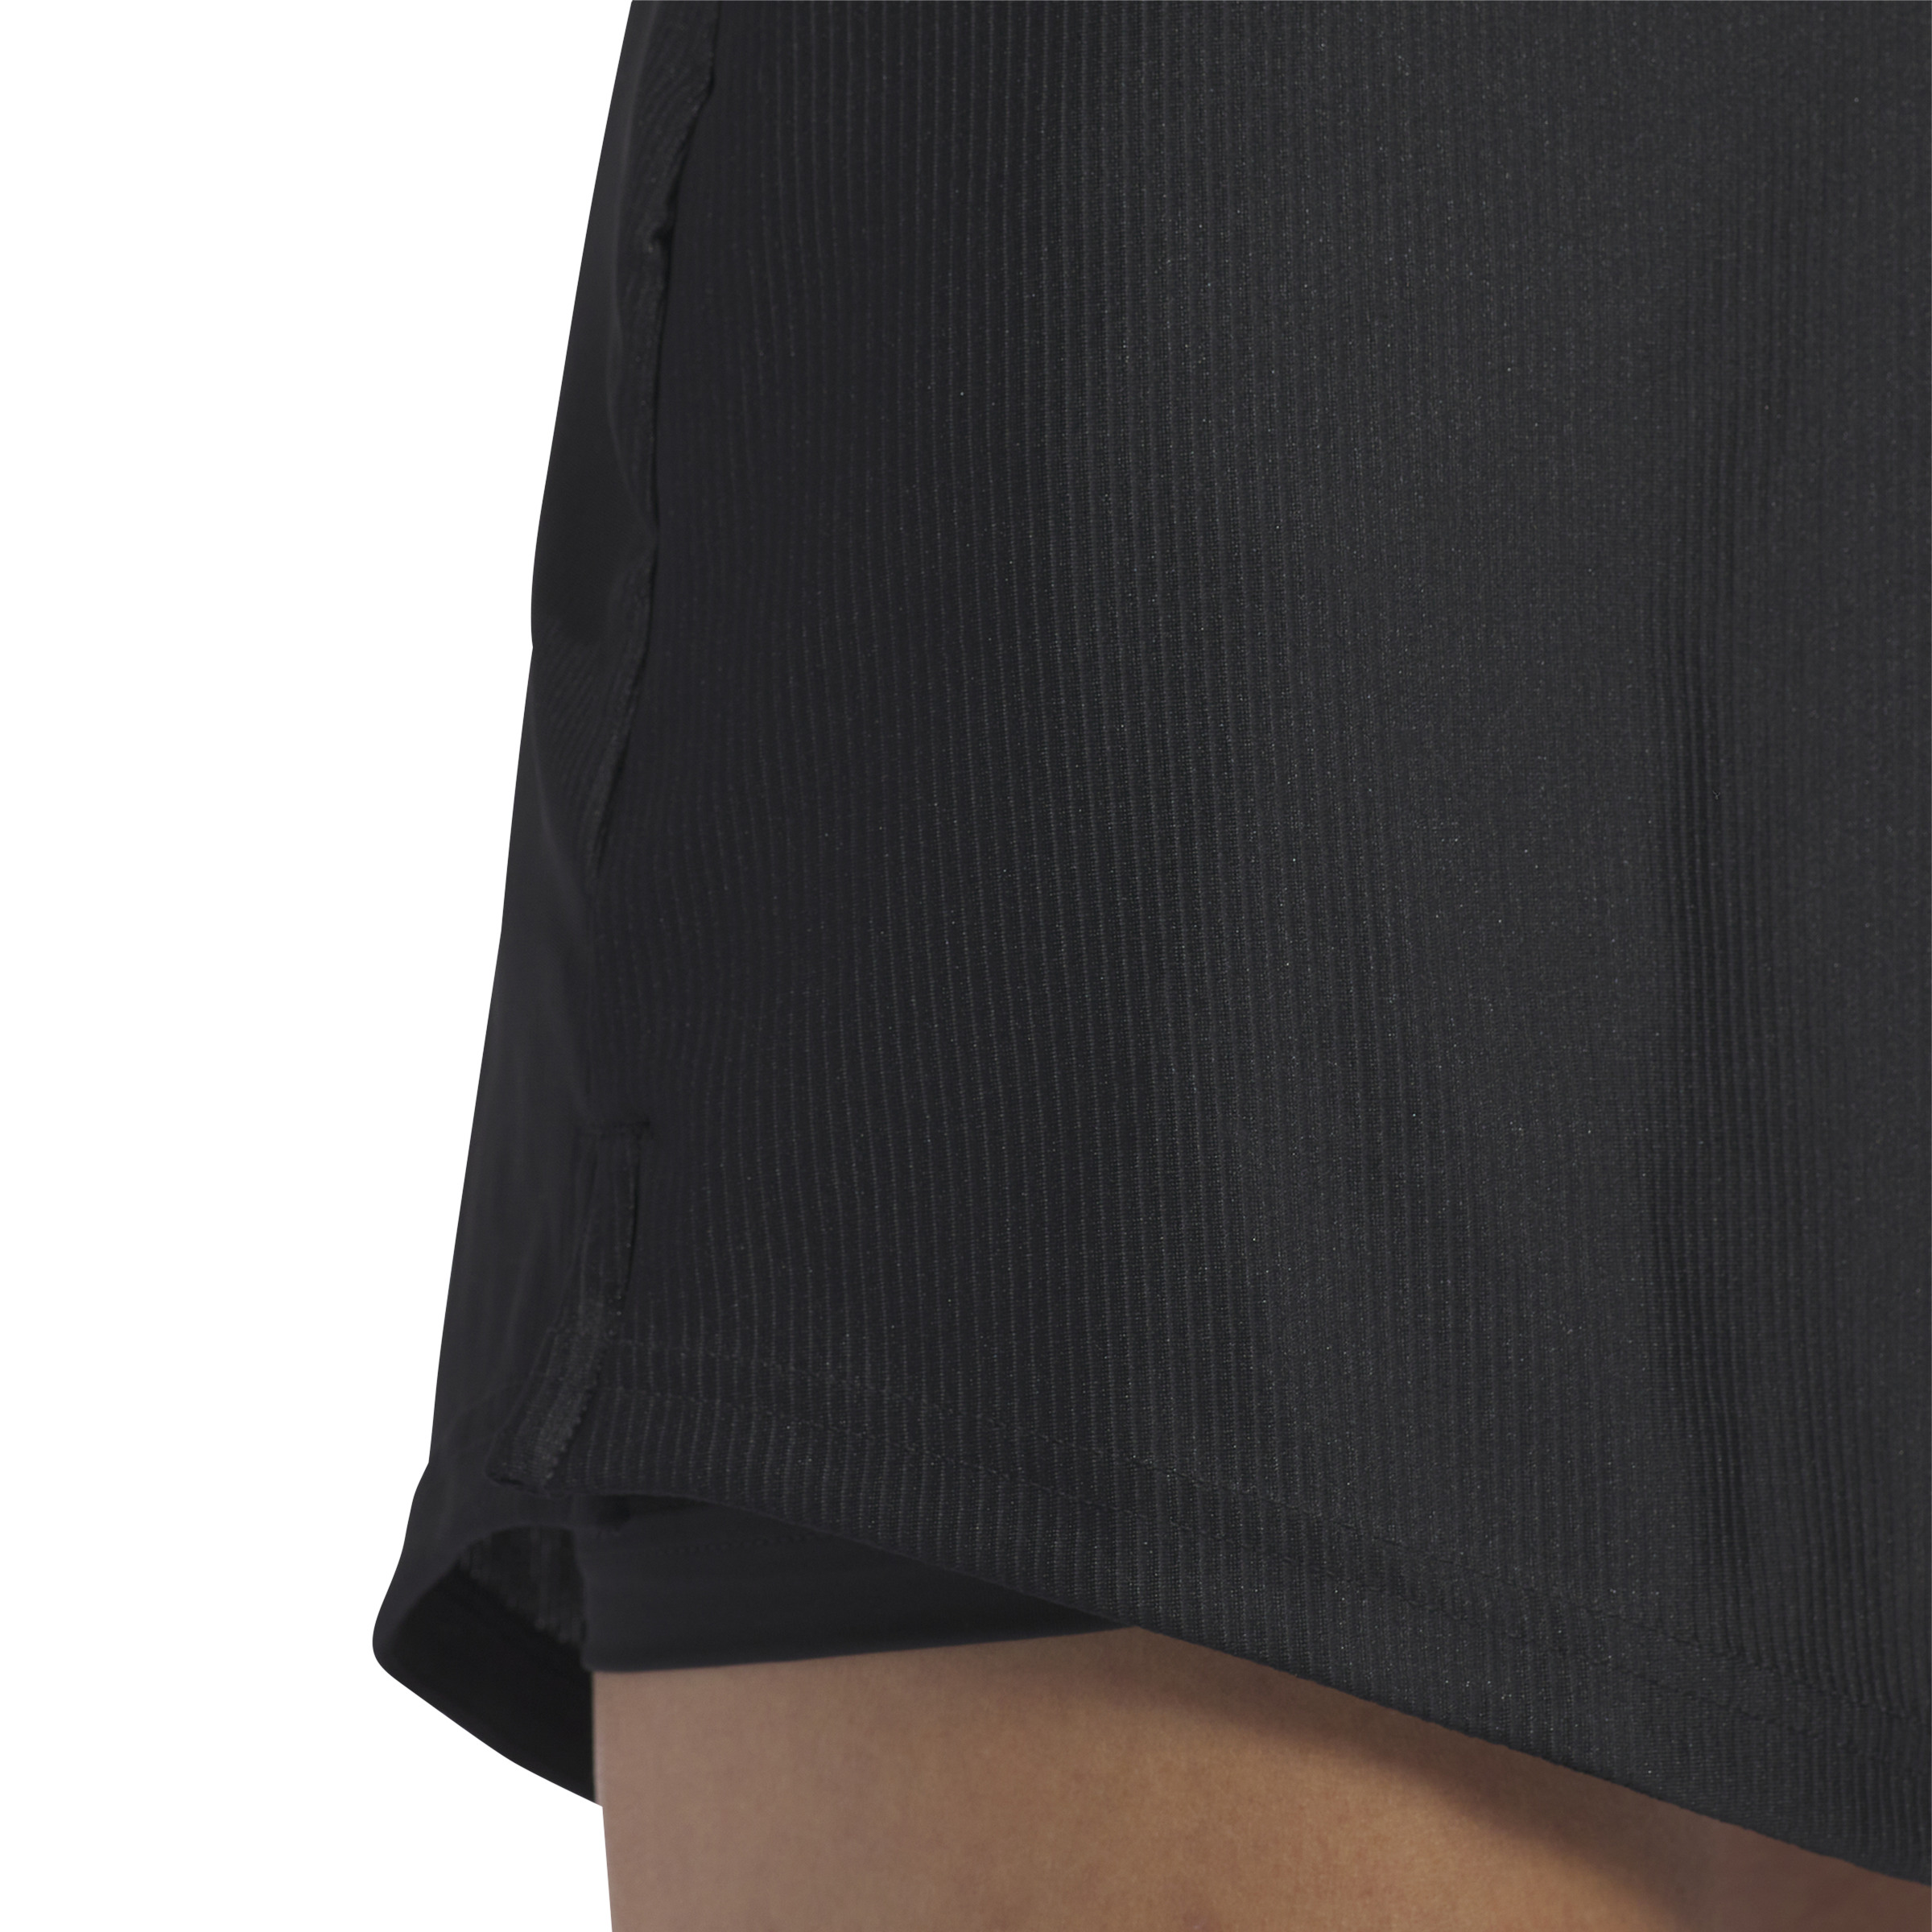 Adidas | IP4301 | Women's Ultimate365 Sleeveless Dress | Black